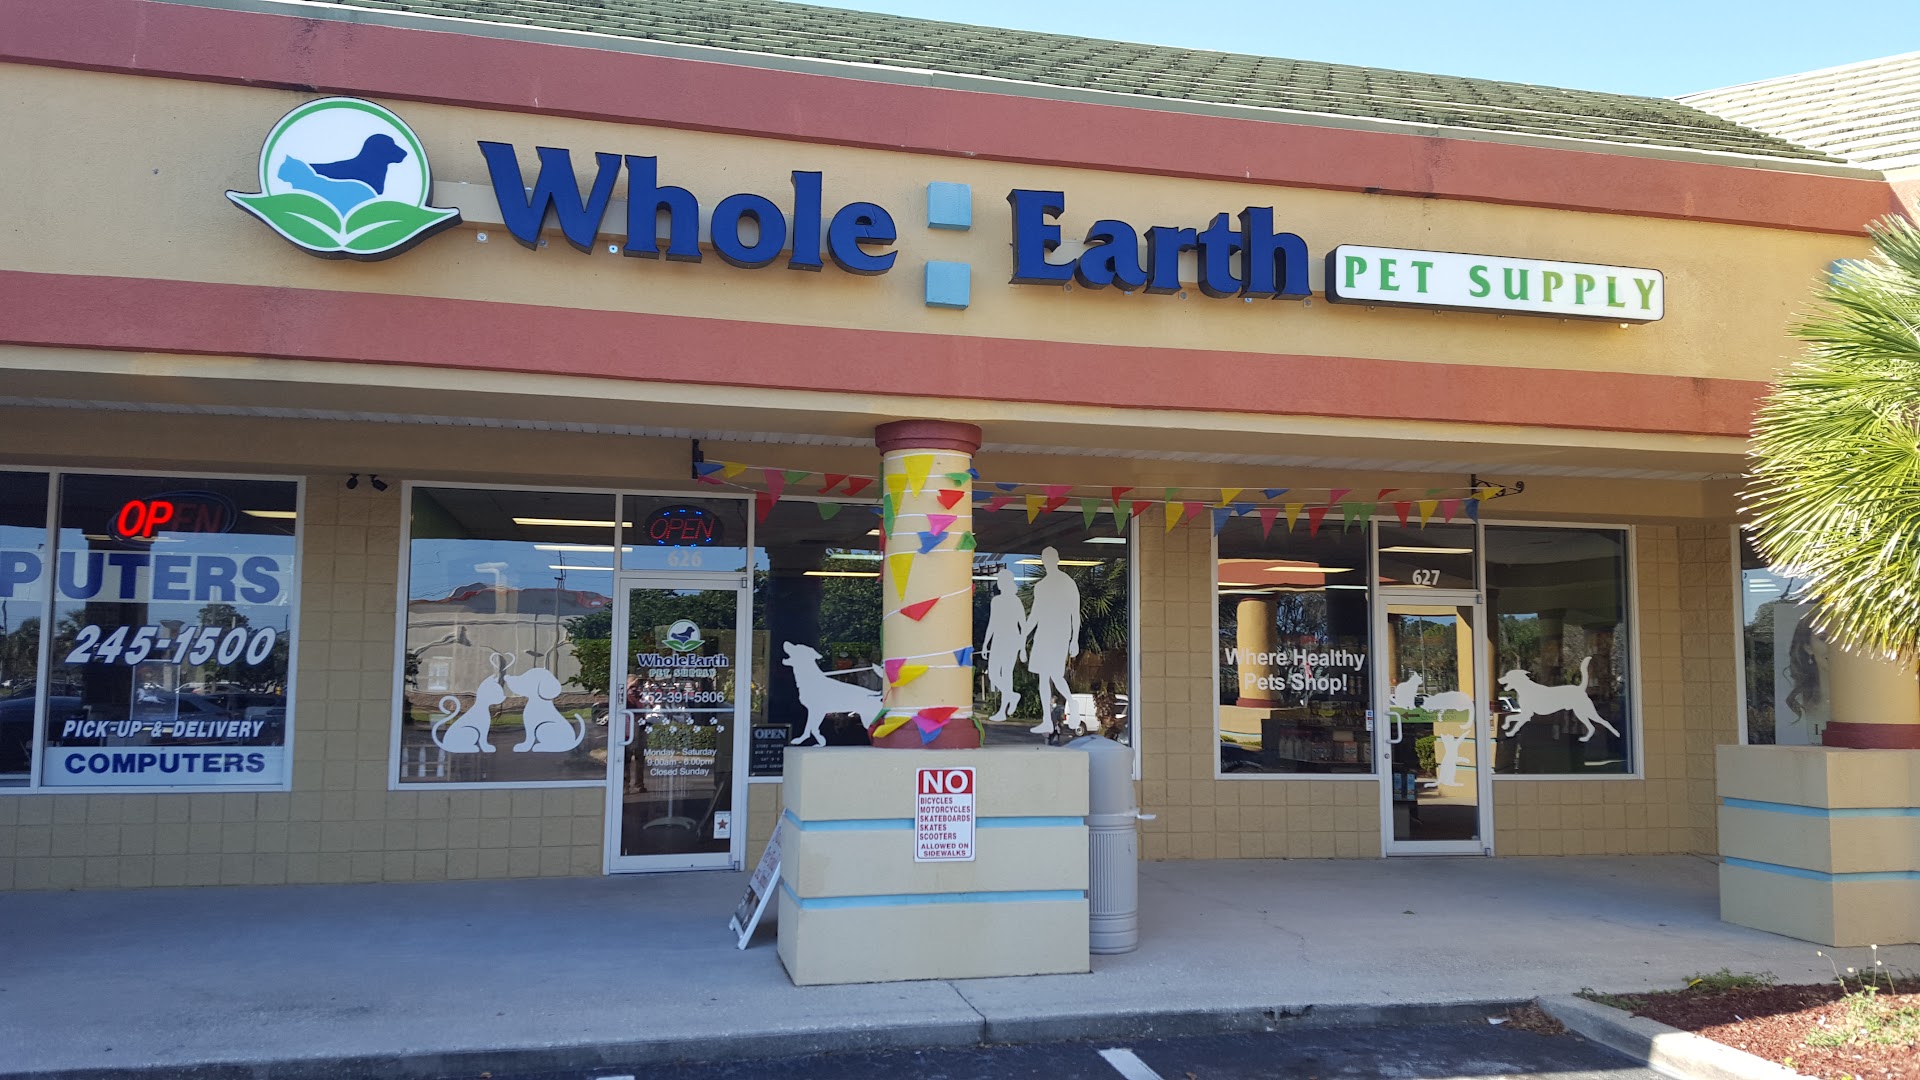 Whole Earth Pet Supply